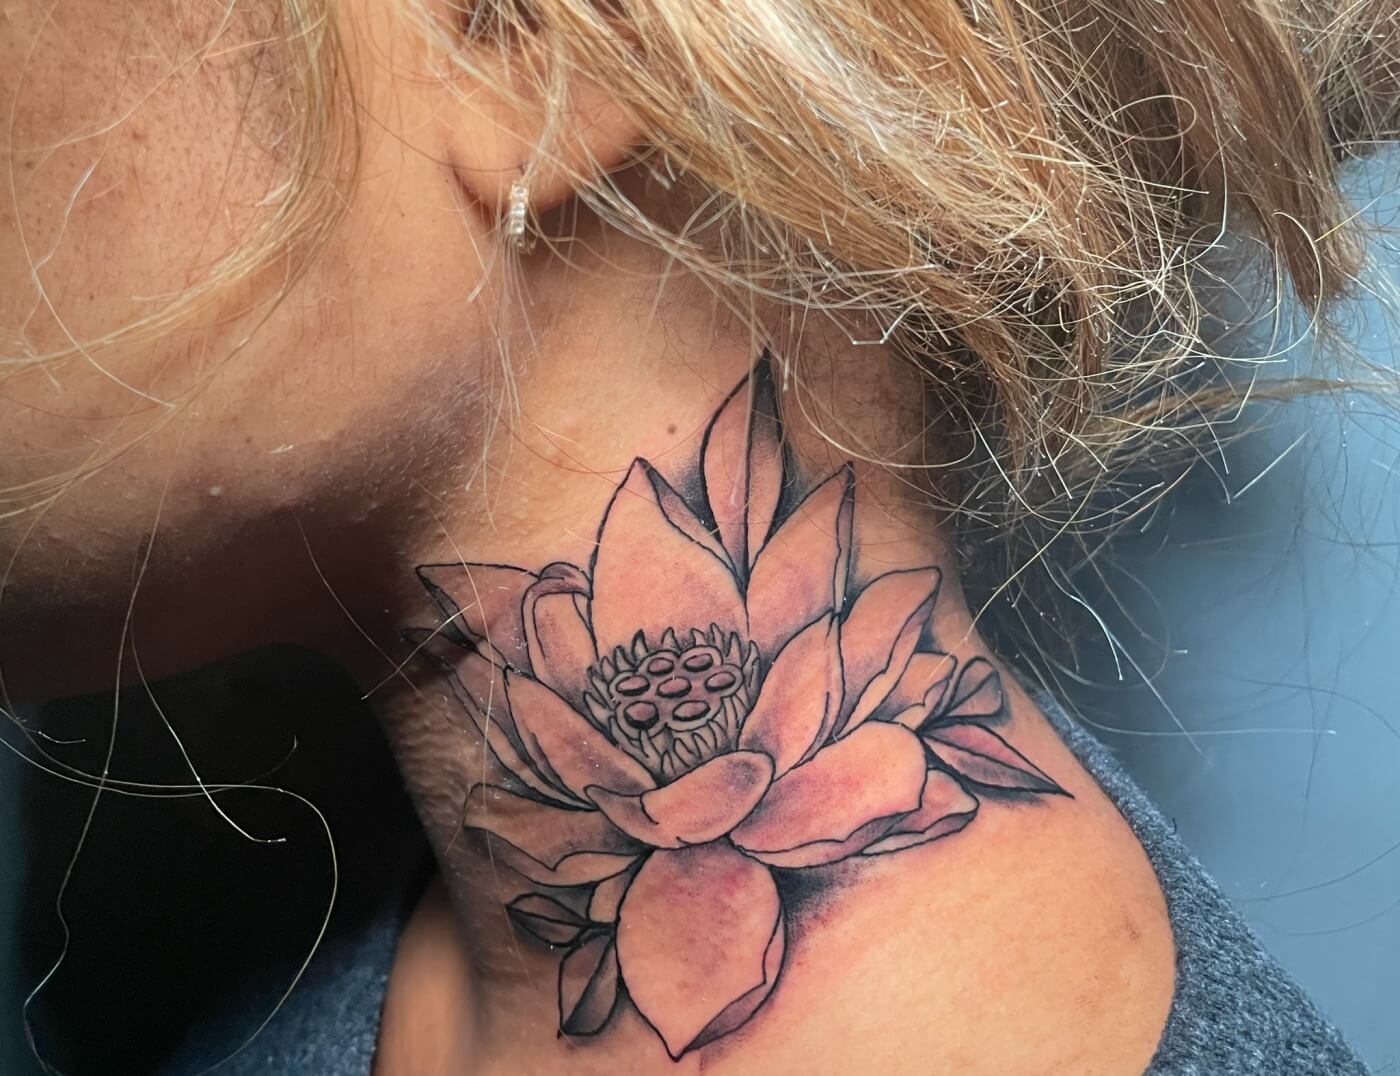 Simply Inked Lotus Flower Temporary Tattoo, Designer Tattoo for Girls Boys  Men Women waterproof Sticker Size: 2.5 X 4 inch 1pc. l Black l 2g :  Amazon.in: Beauty